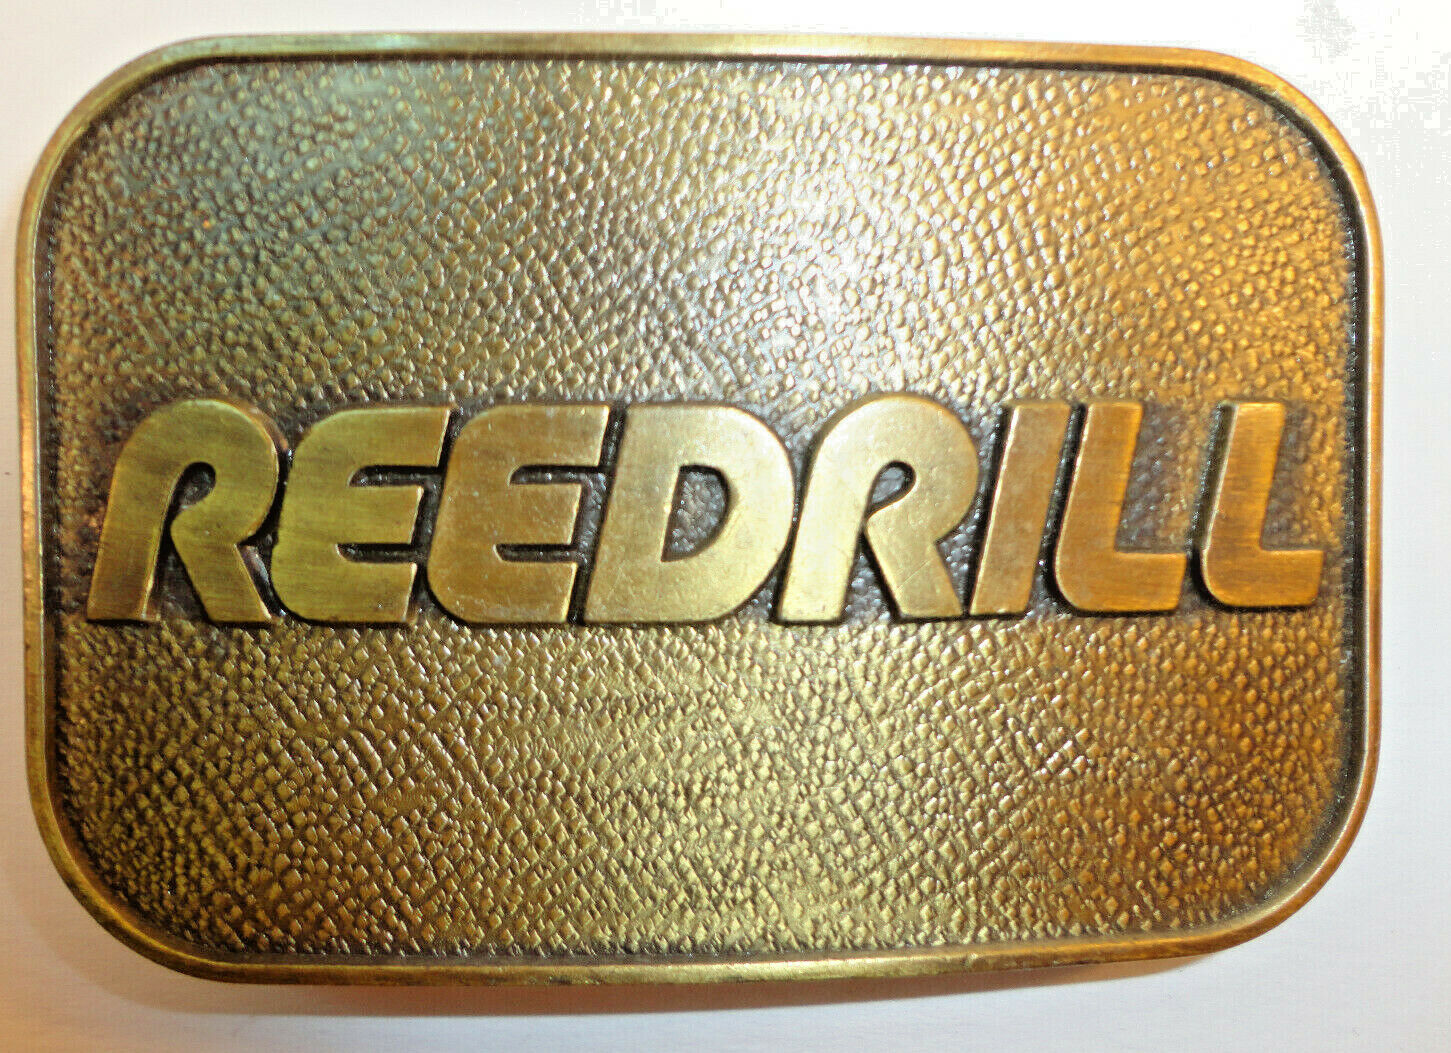 Reedrill Belt Buckle Solid Brass Mining Construction Equipment RJ Co. Texoma Vtg